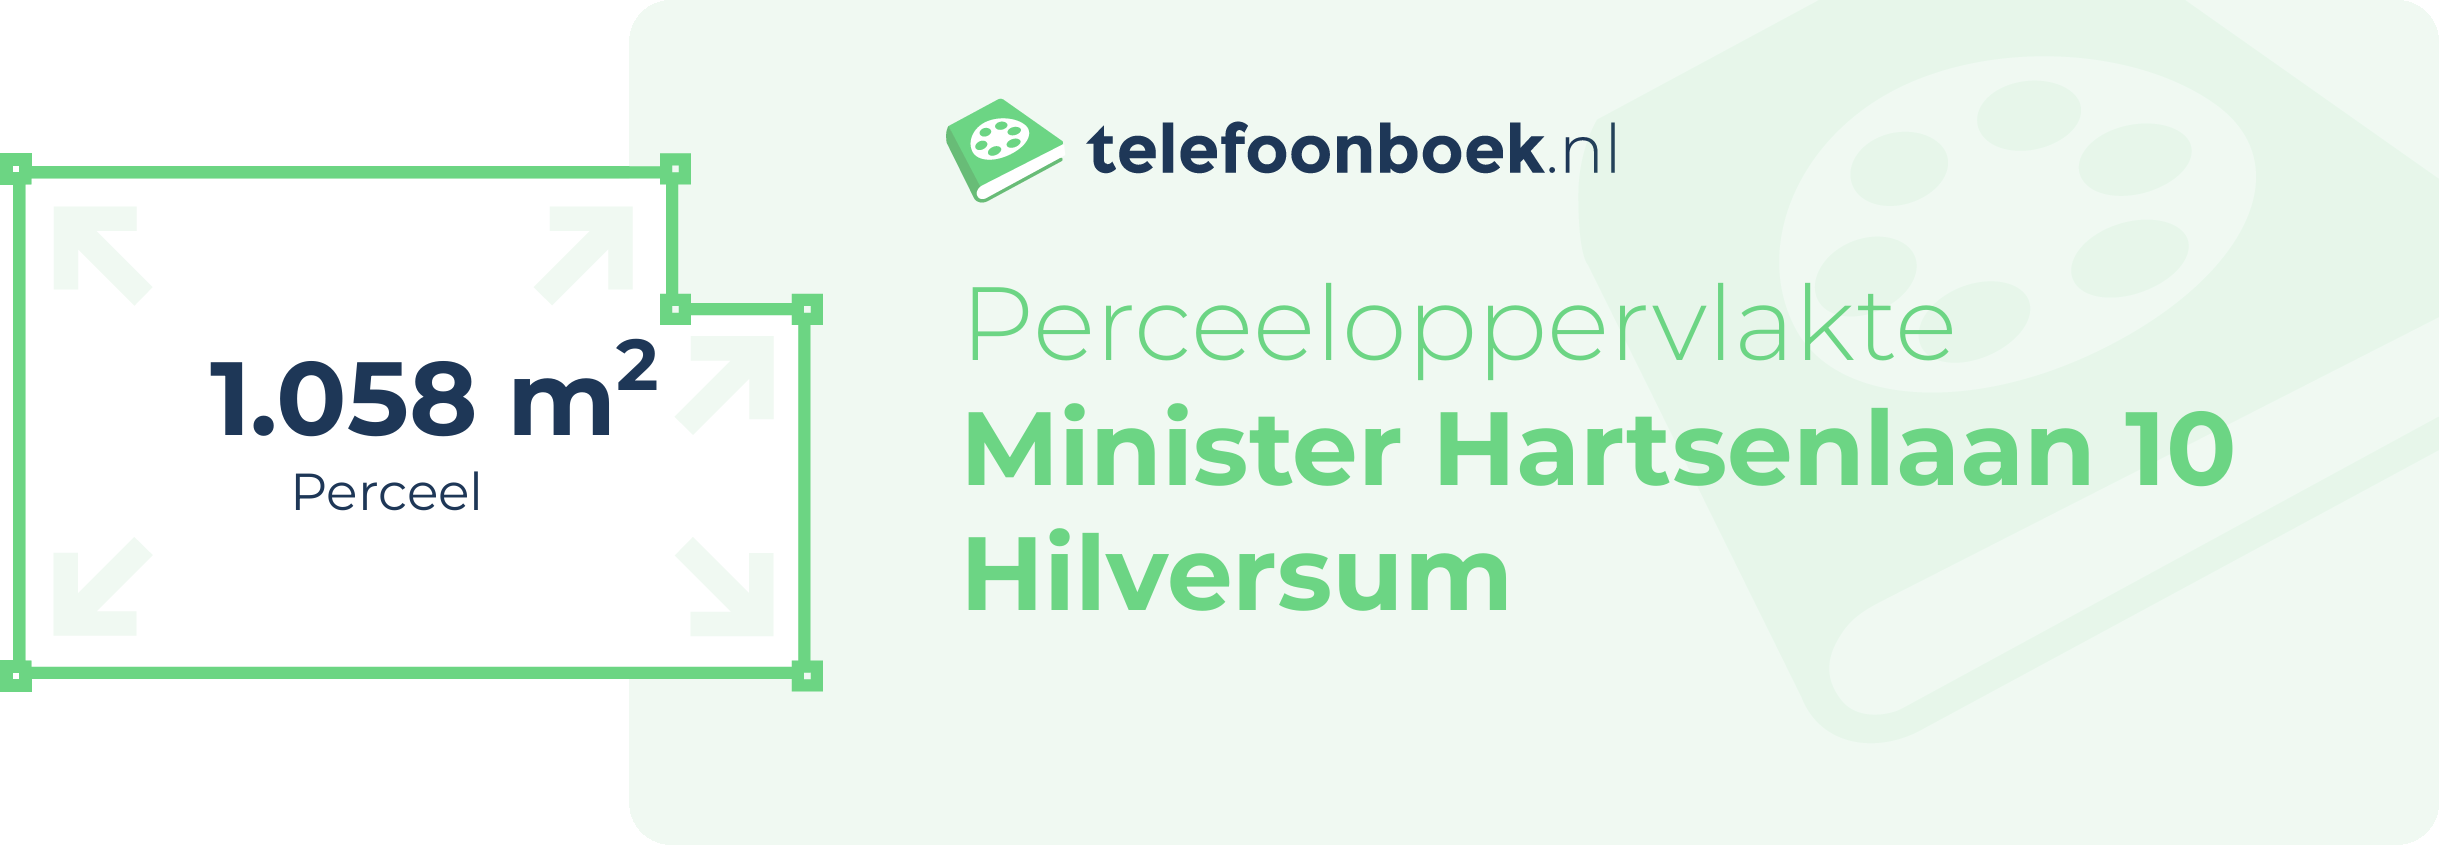 Perceeloppervlakte Minister Hartsenlaan 10 Hilversum